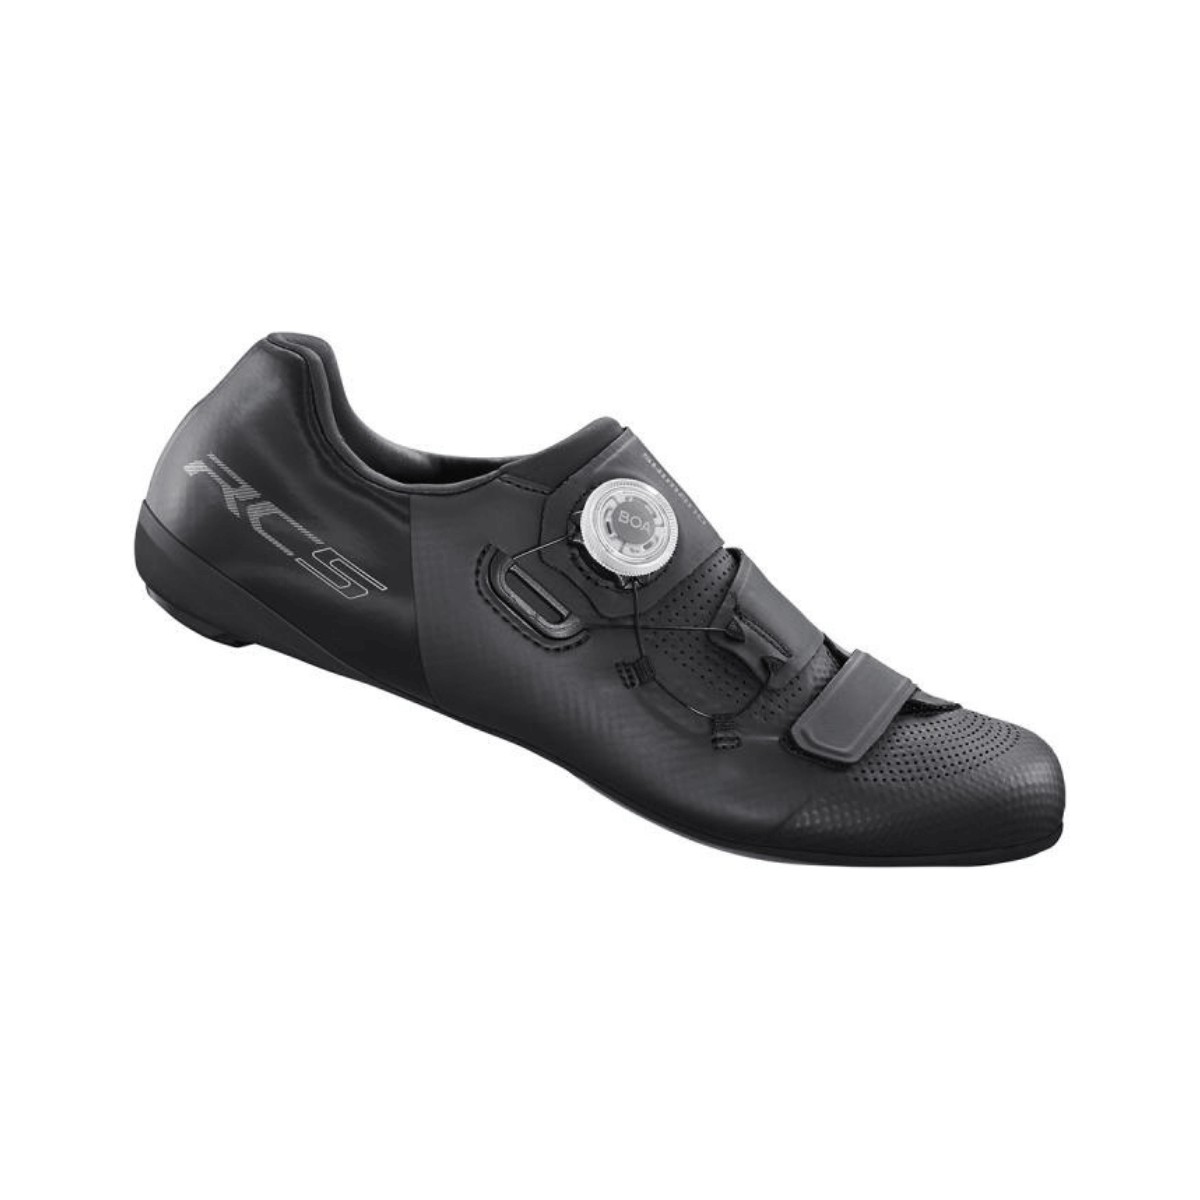 Shimano RC502 Shoes Black, Size 44 - EUR